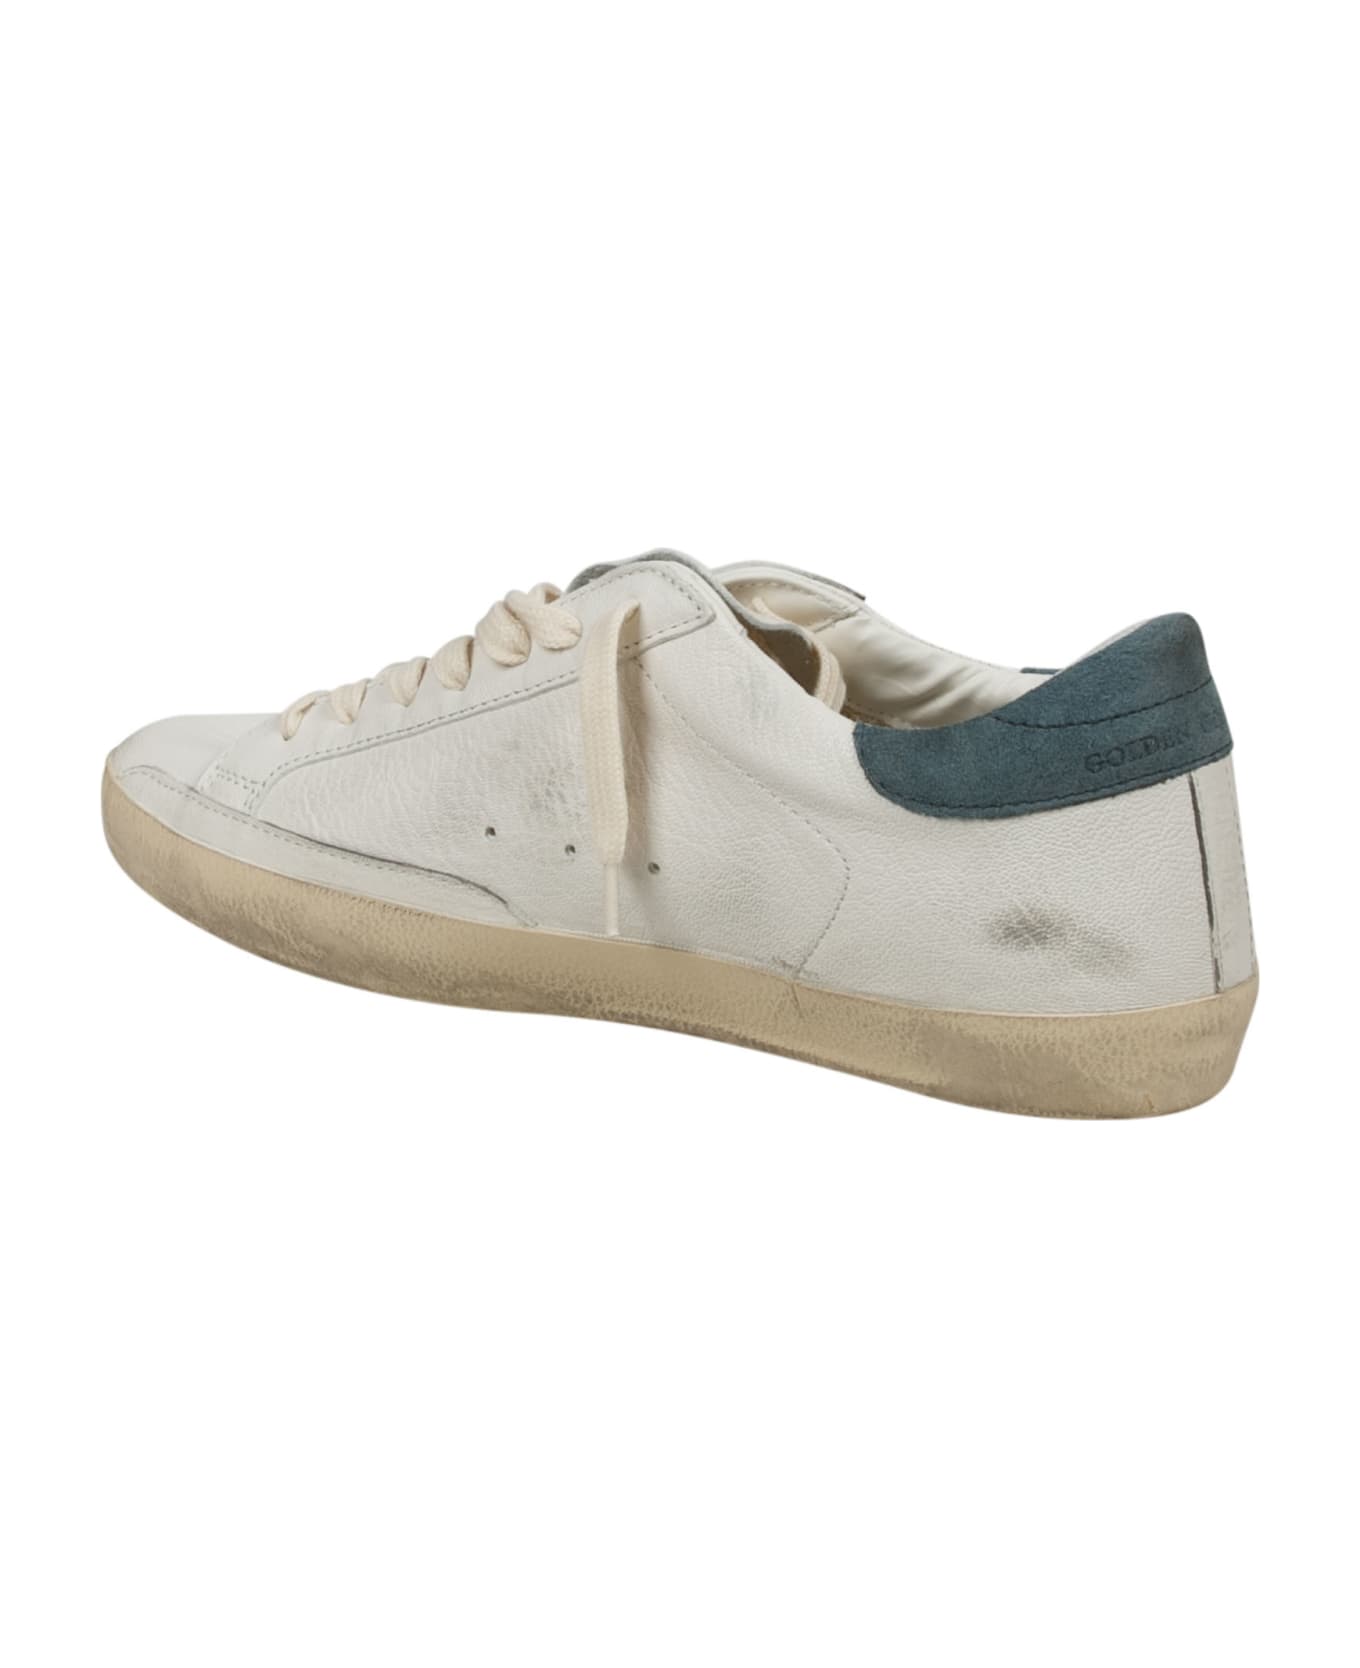 Golden Goose Super-star Classic Sneakers - White/Bottle Green